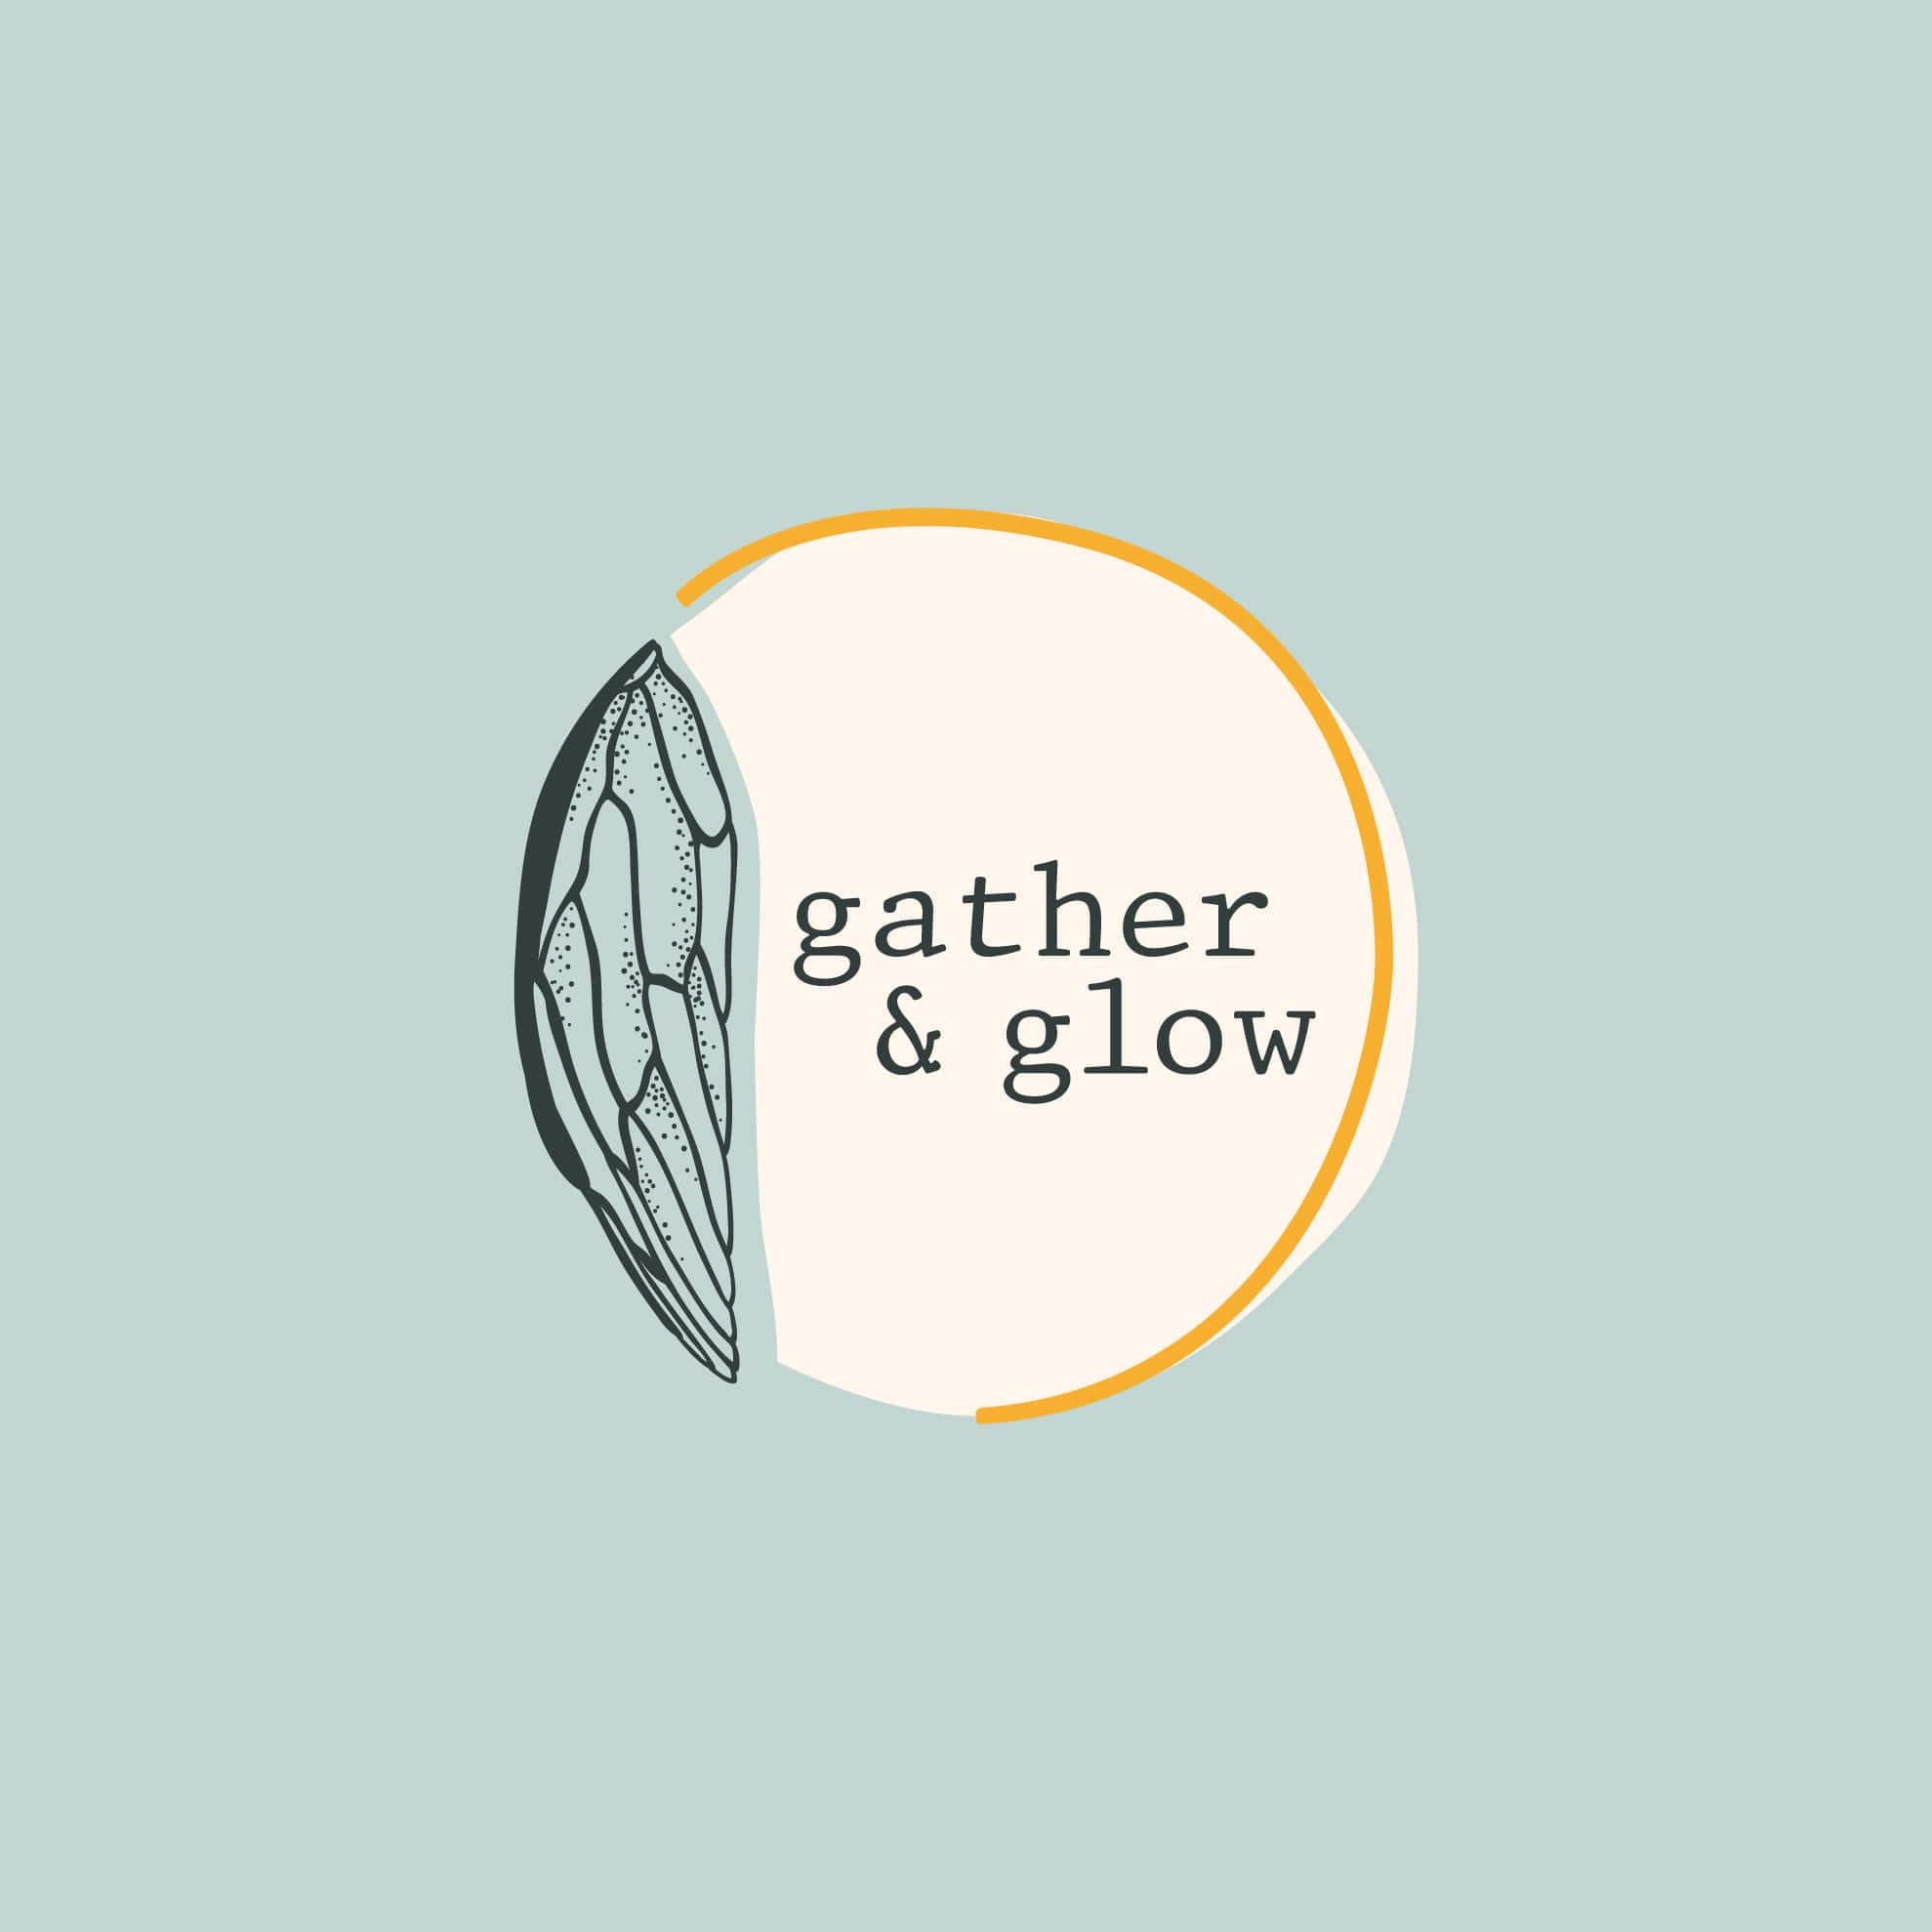 ourwork-gatherglow-logo